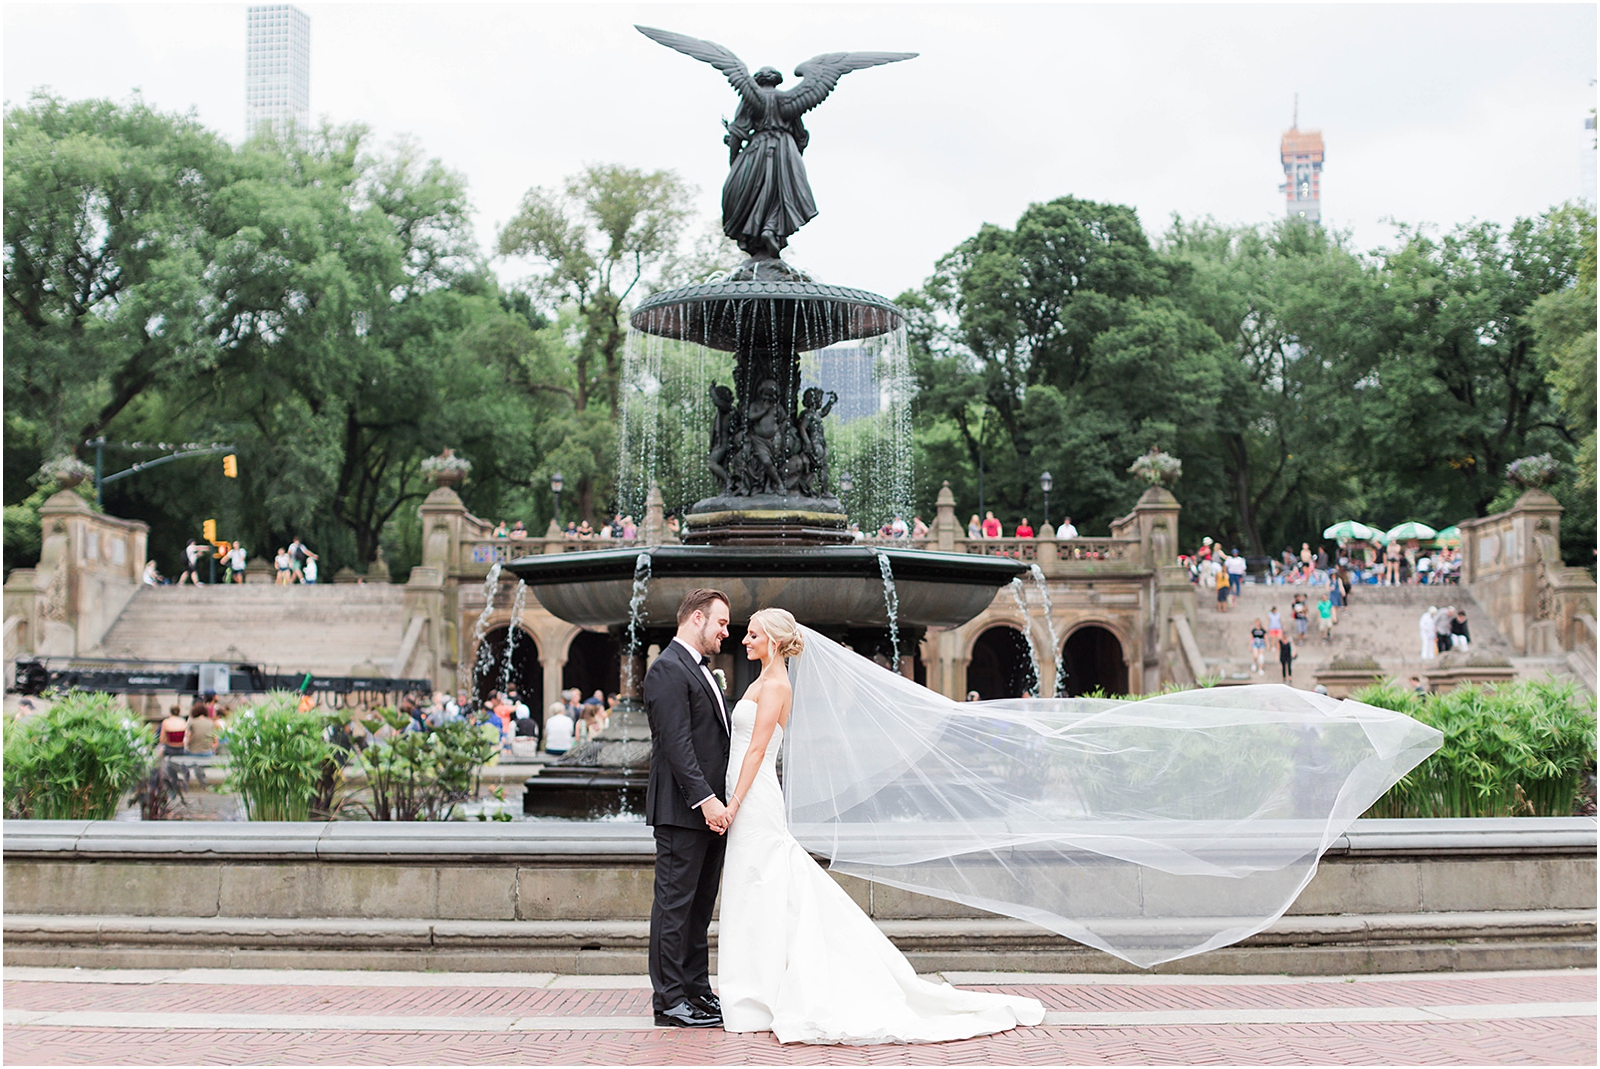 Central Park Boathouse wedding in New York City Photography by Mekina Saylor